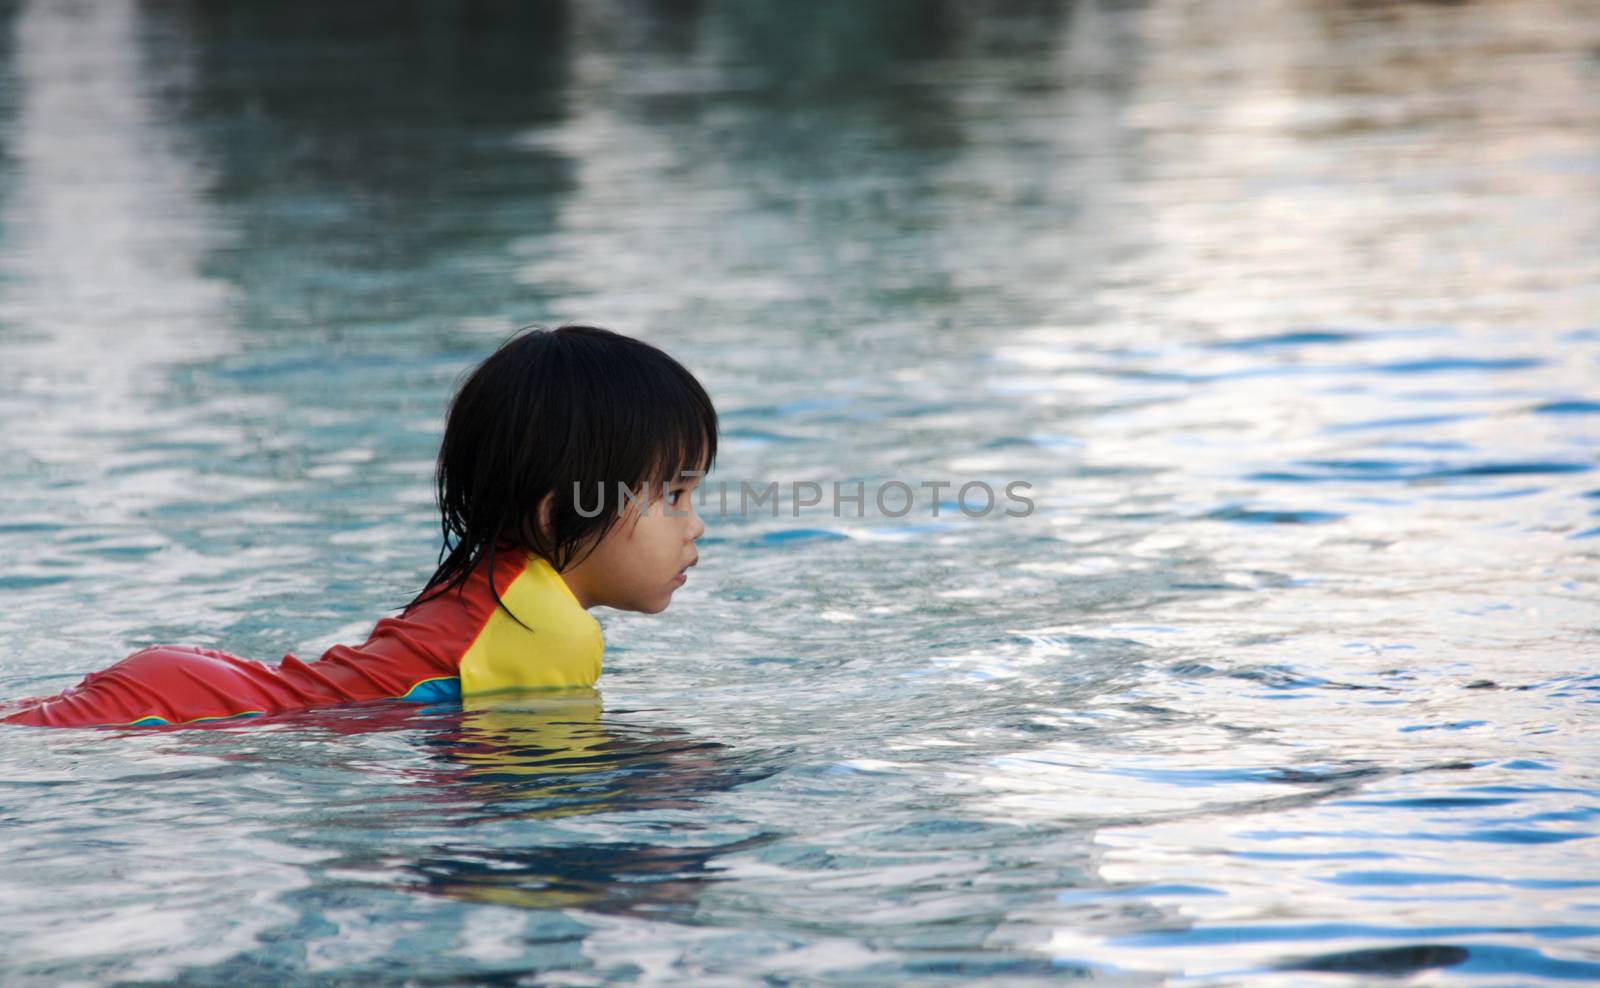 children play onwater in swimimg pool by yanukit